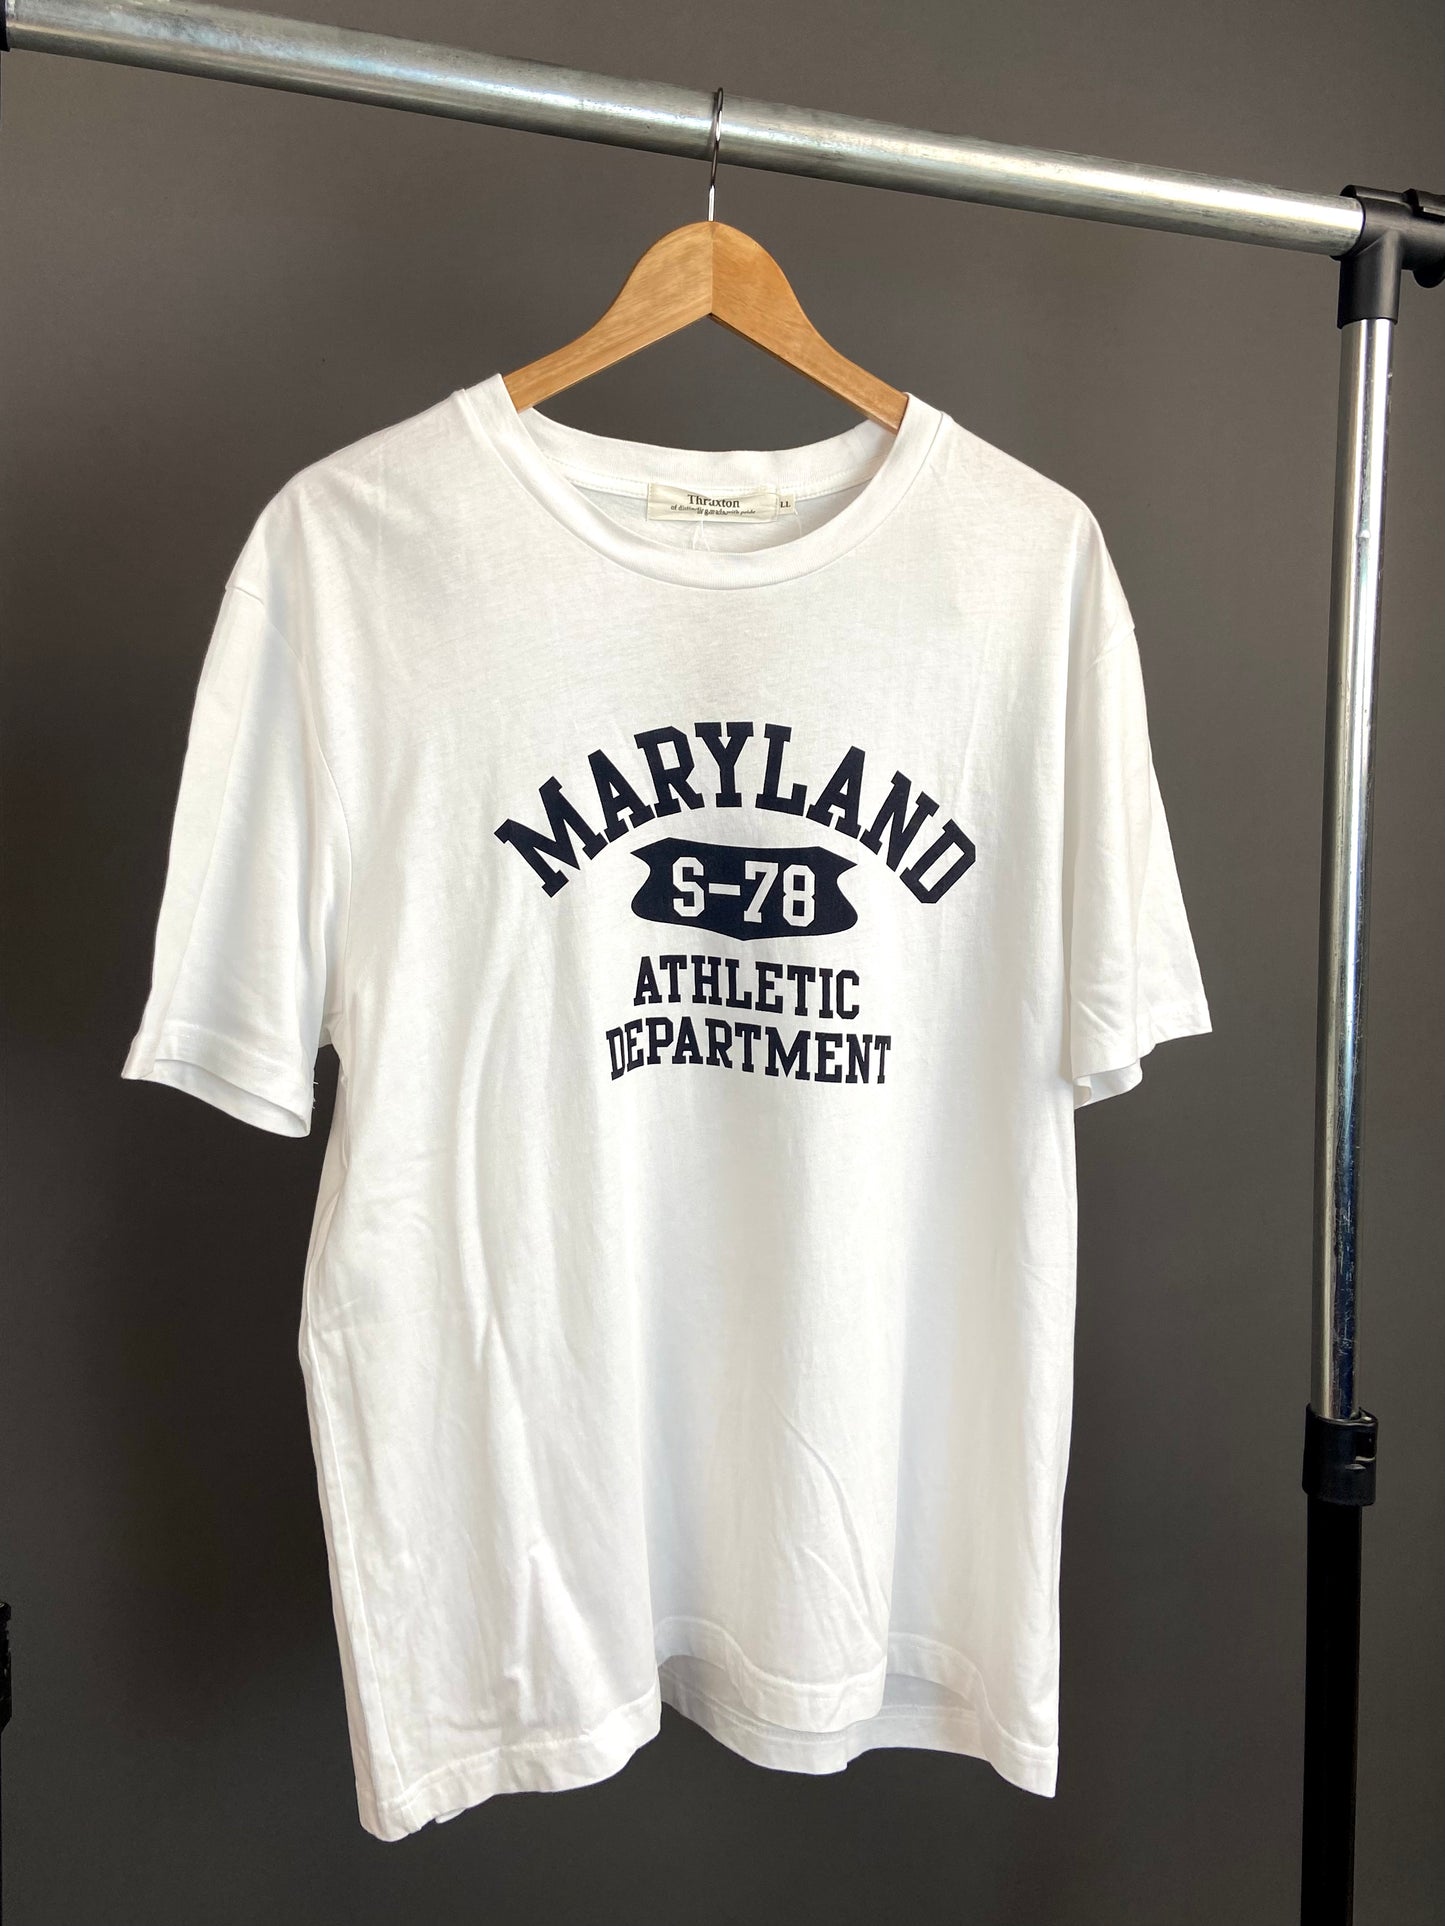 Thruxton Maryland print t-shirt in whiten